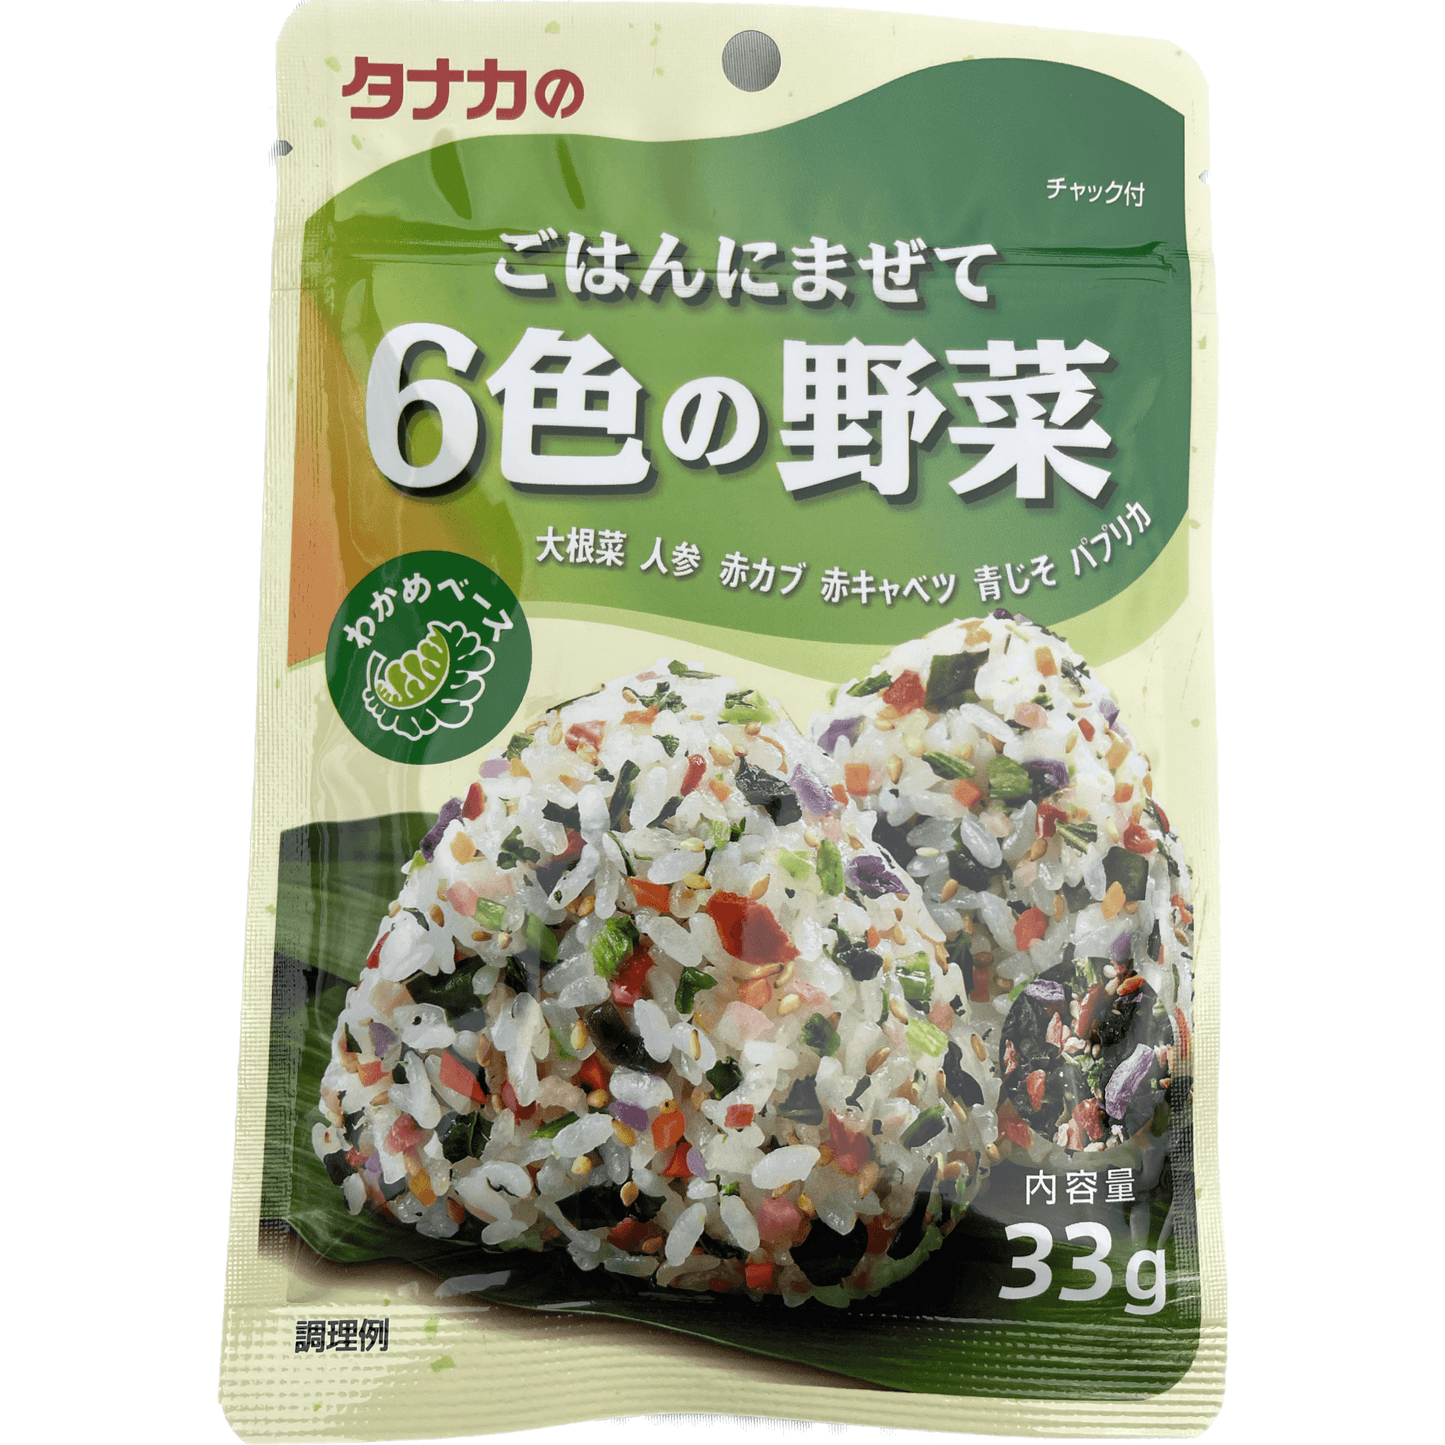 Tanaka mixed with rice (6 colors of vegetables) タナカ　ごはんにまぜて＜6色の野菜＞33g - RiceWineShop